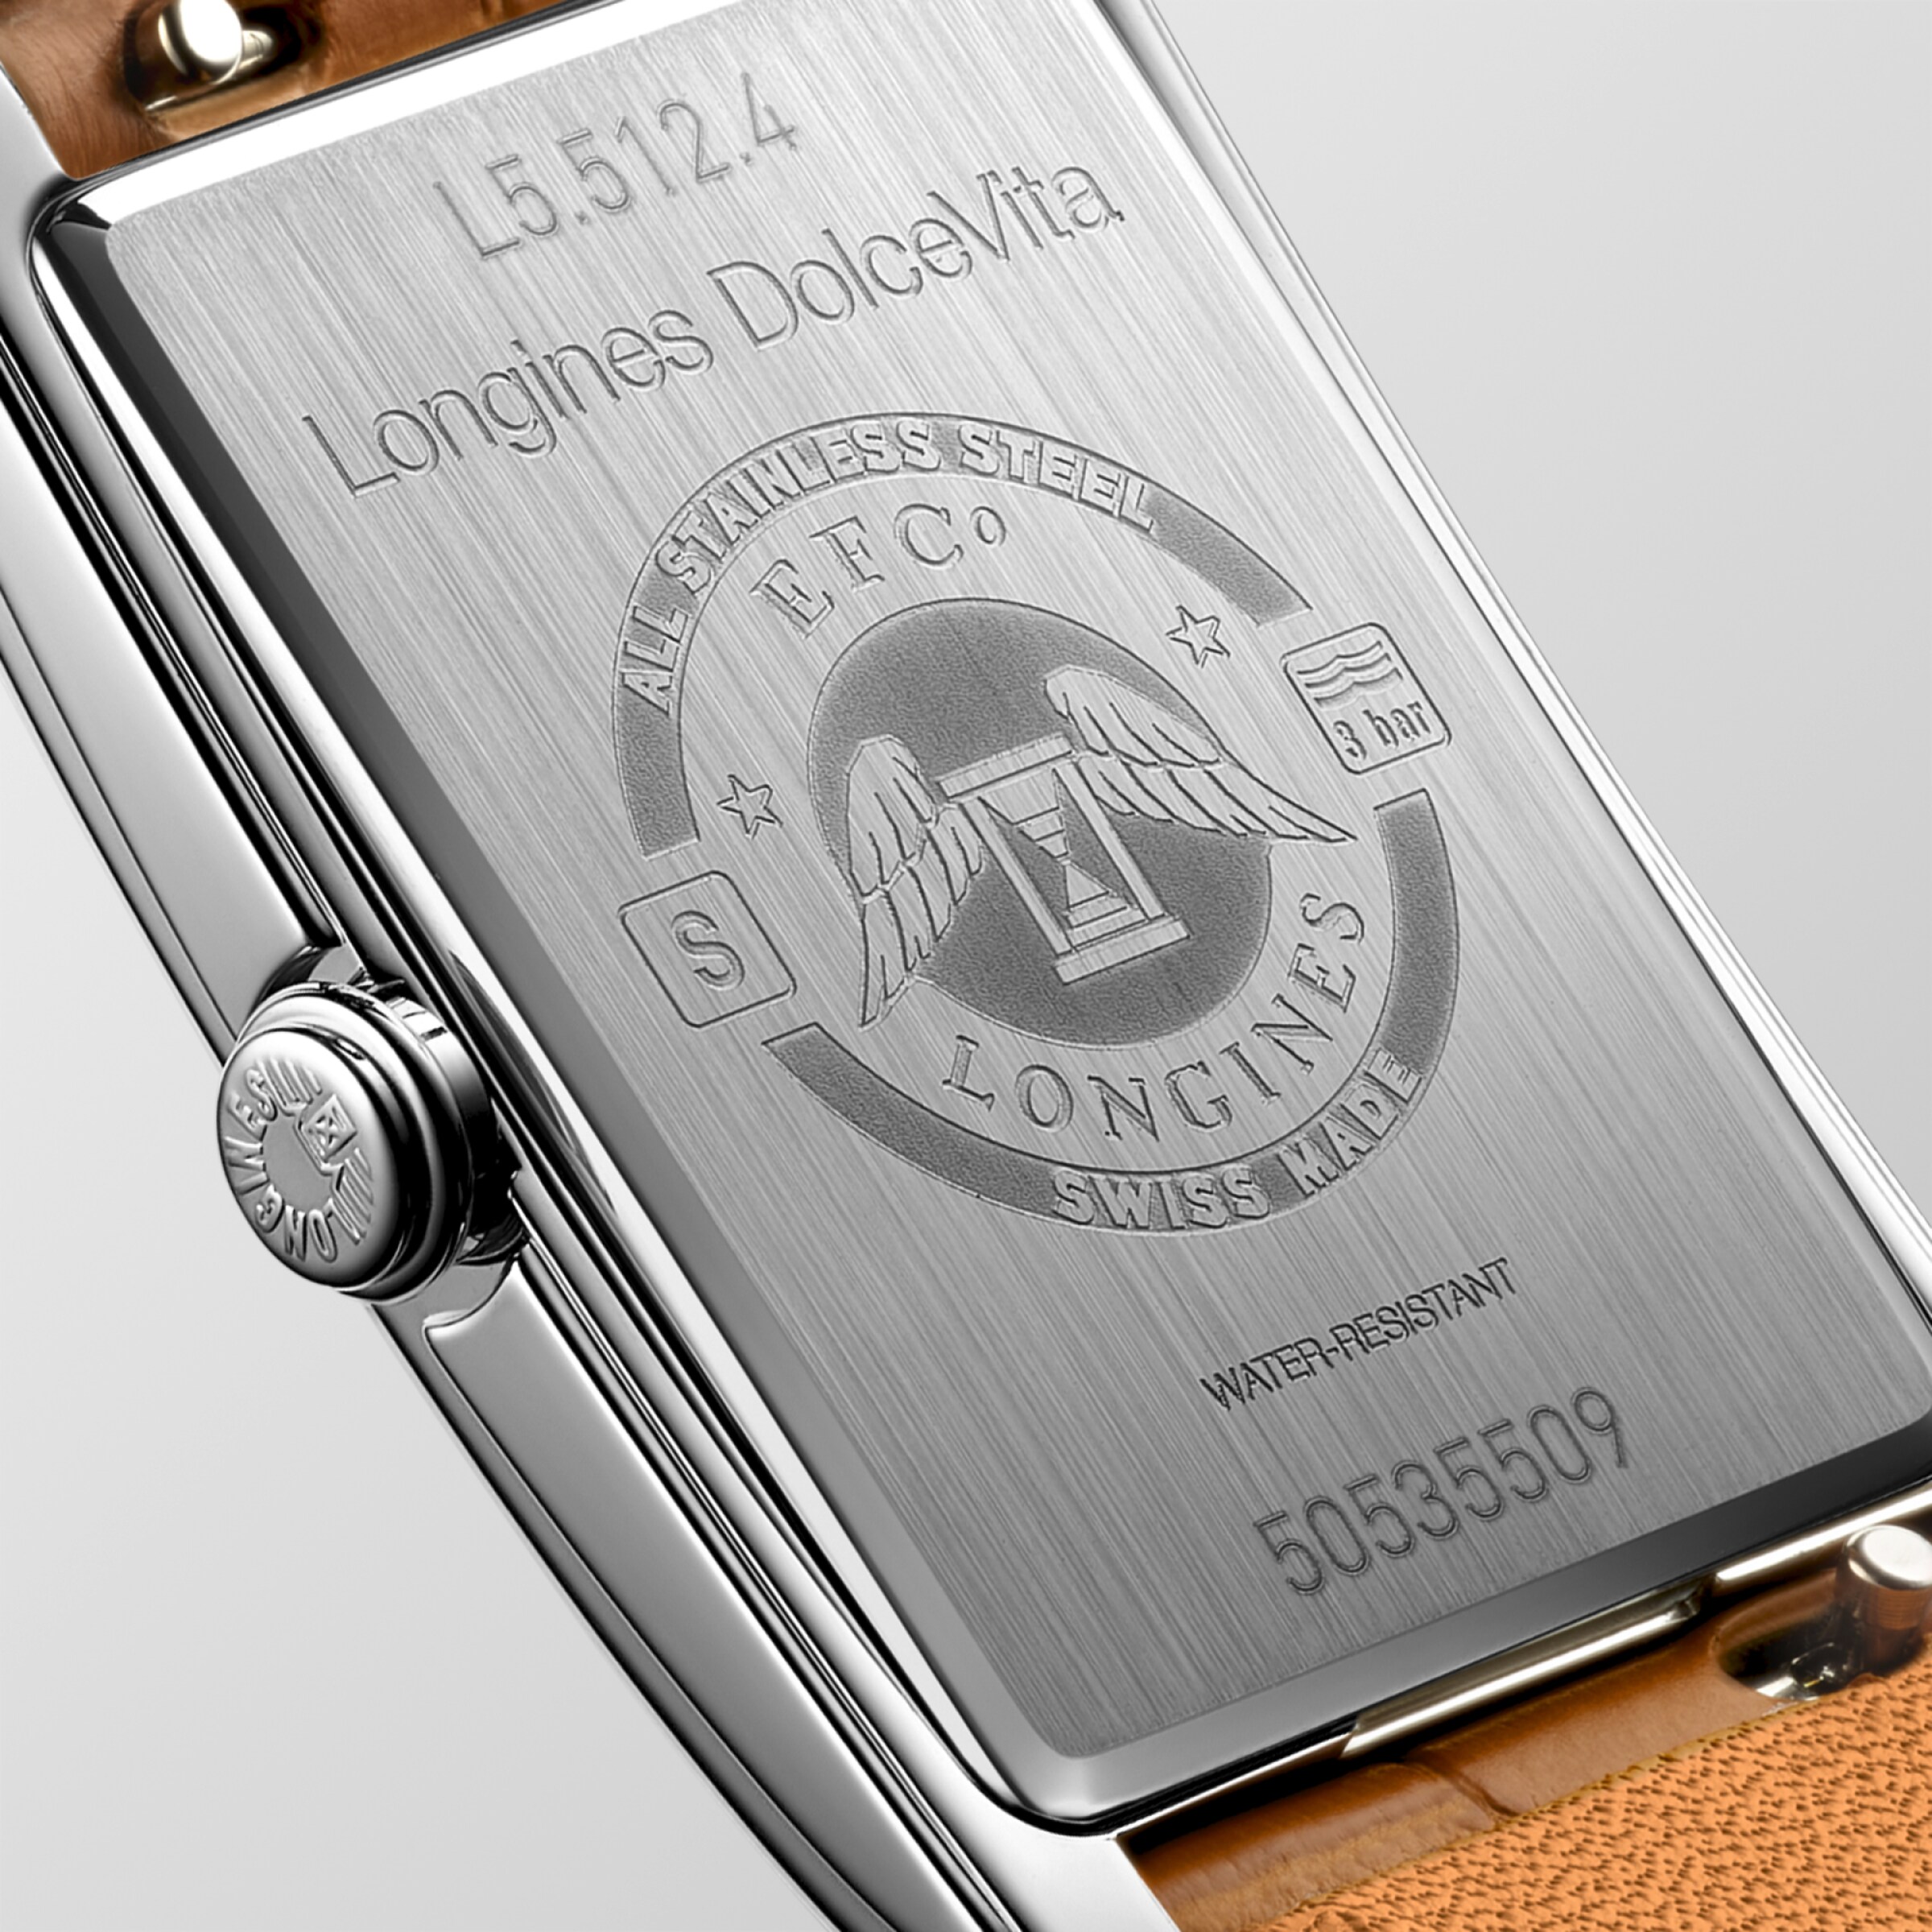 Longines DOLCEVITA Quartz Stainless steel Watch - L5.512.4.71.4